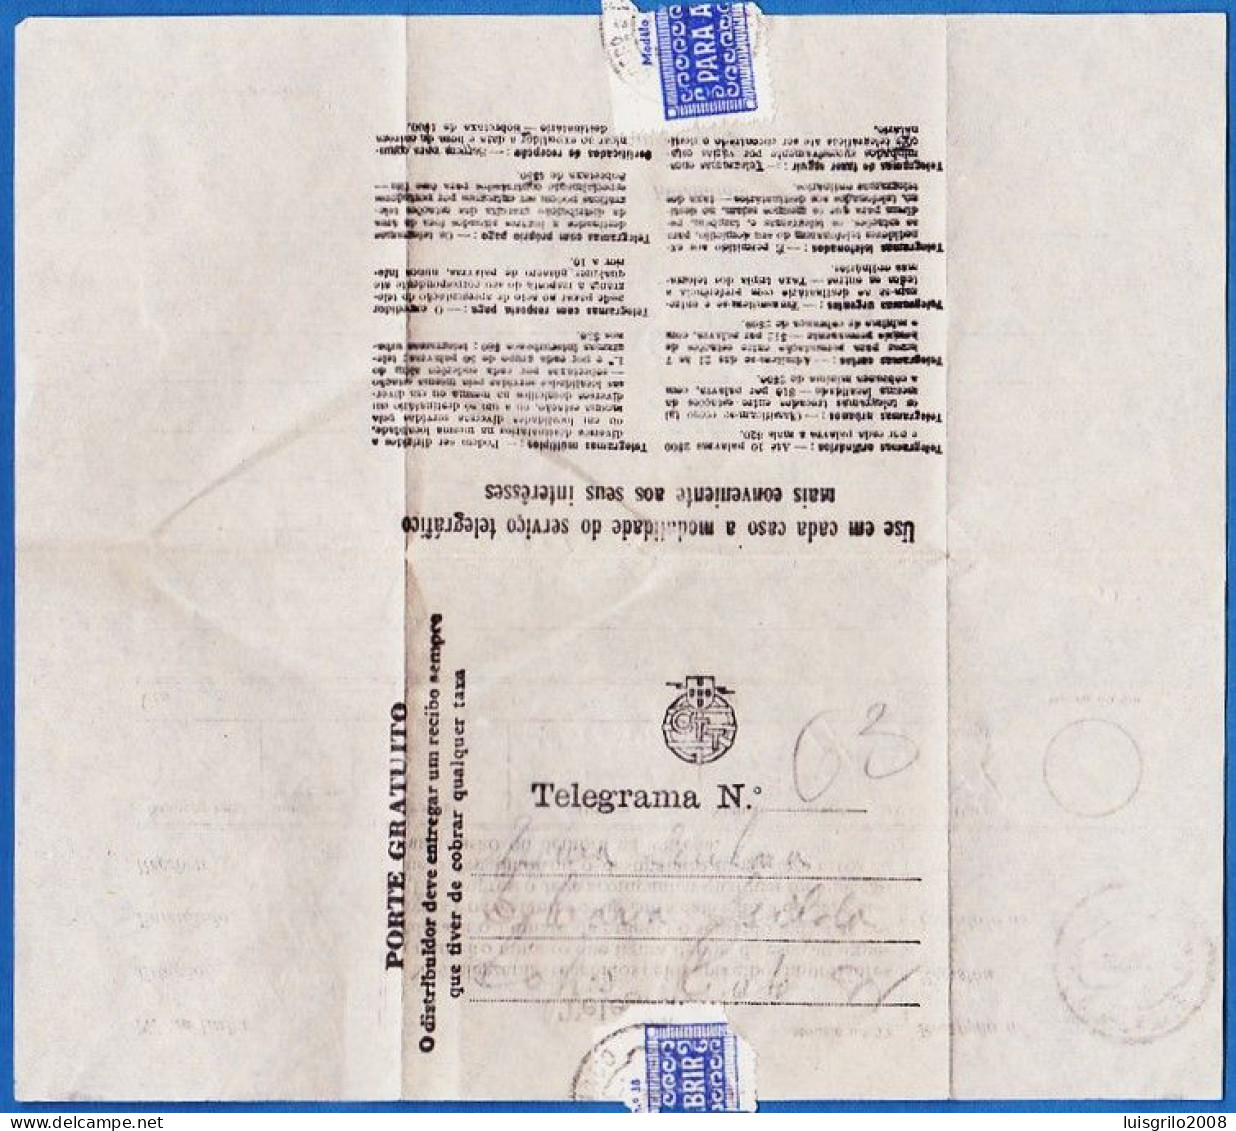 Telegram/ Telegrama - Tortosendo > Covilhã -|- Postmark - Covilhã, 1932 - Covers & Documents